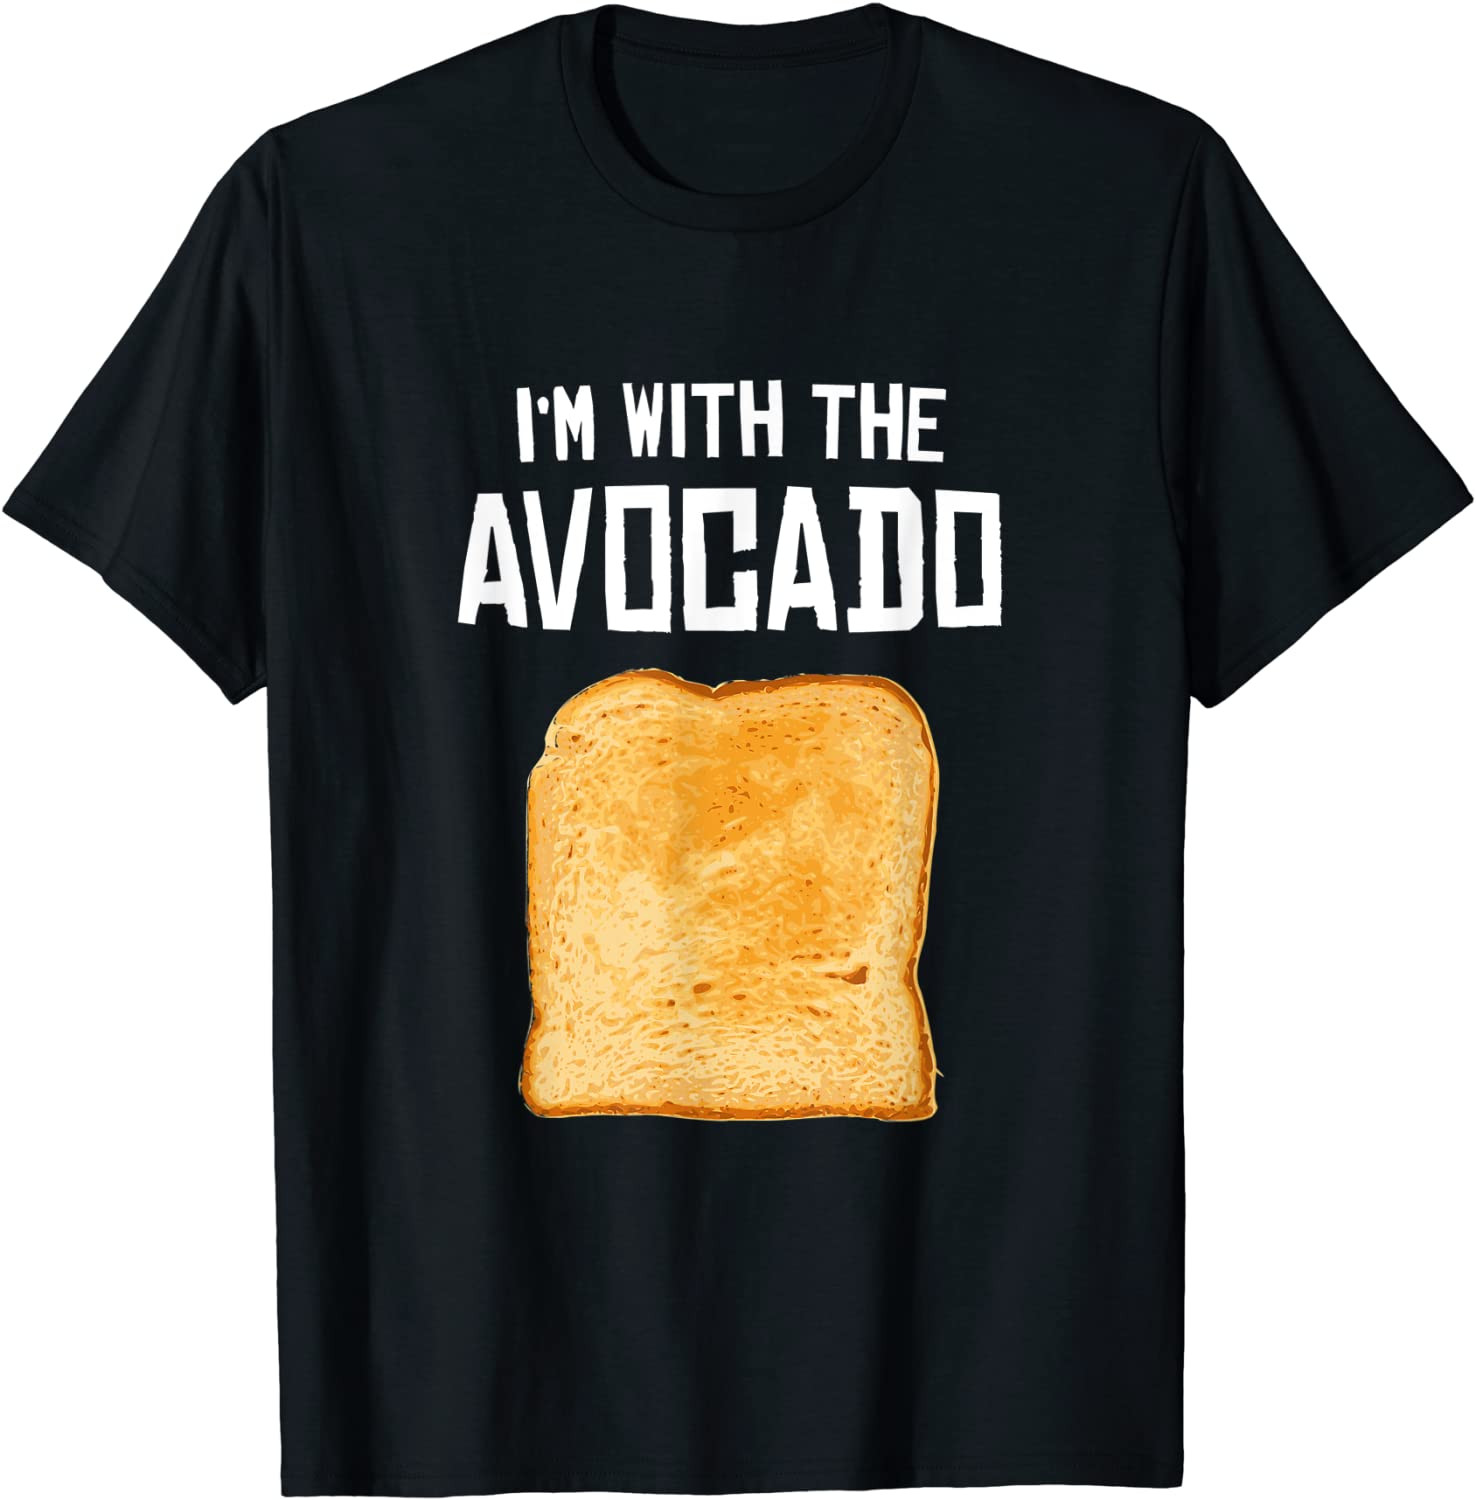 I'm With The Avocado" Toast Halloween Costume T-Shirt